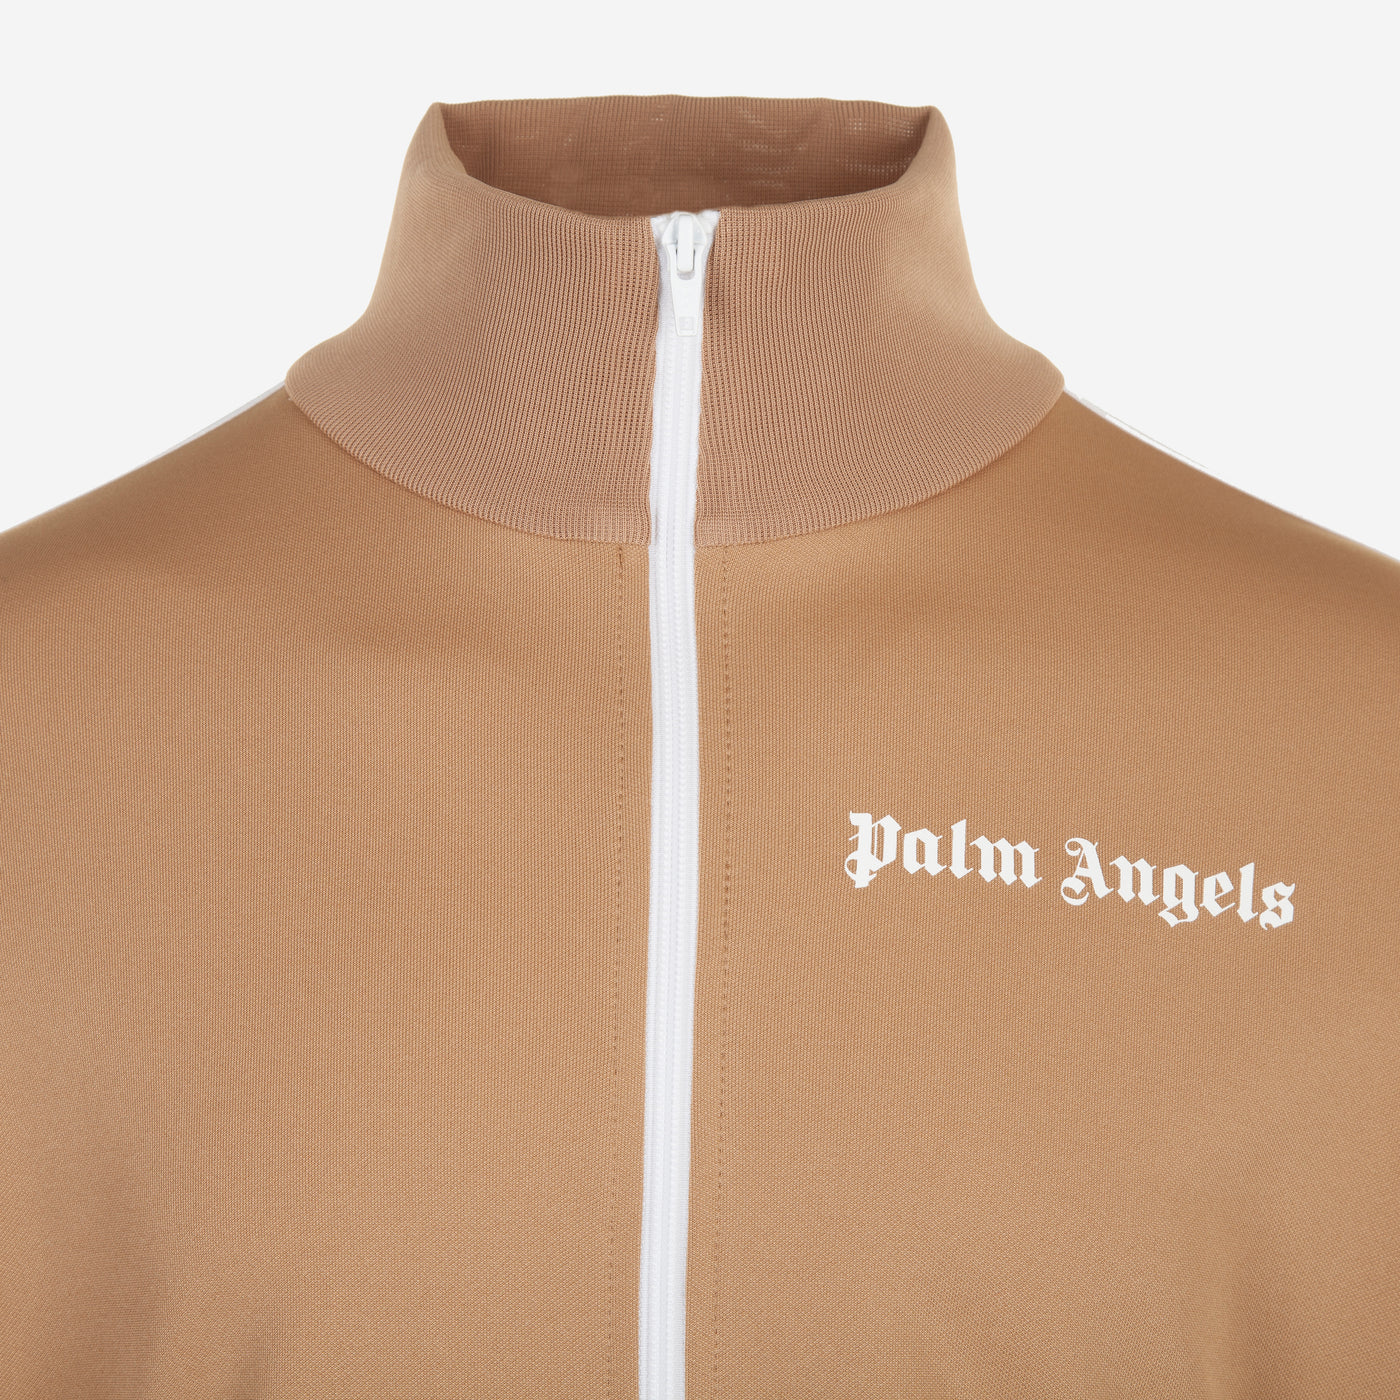 Palm Angels Classic Track Jacket